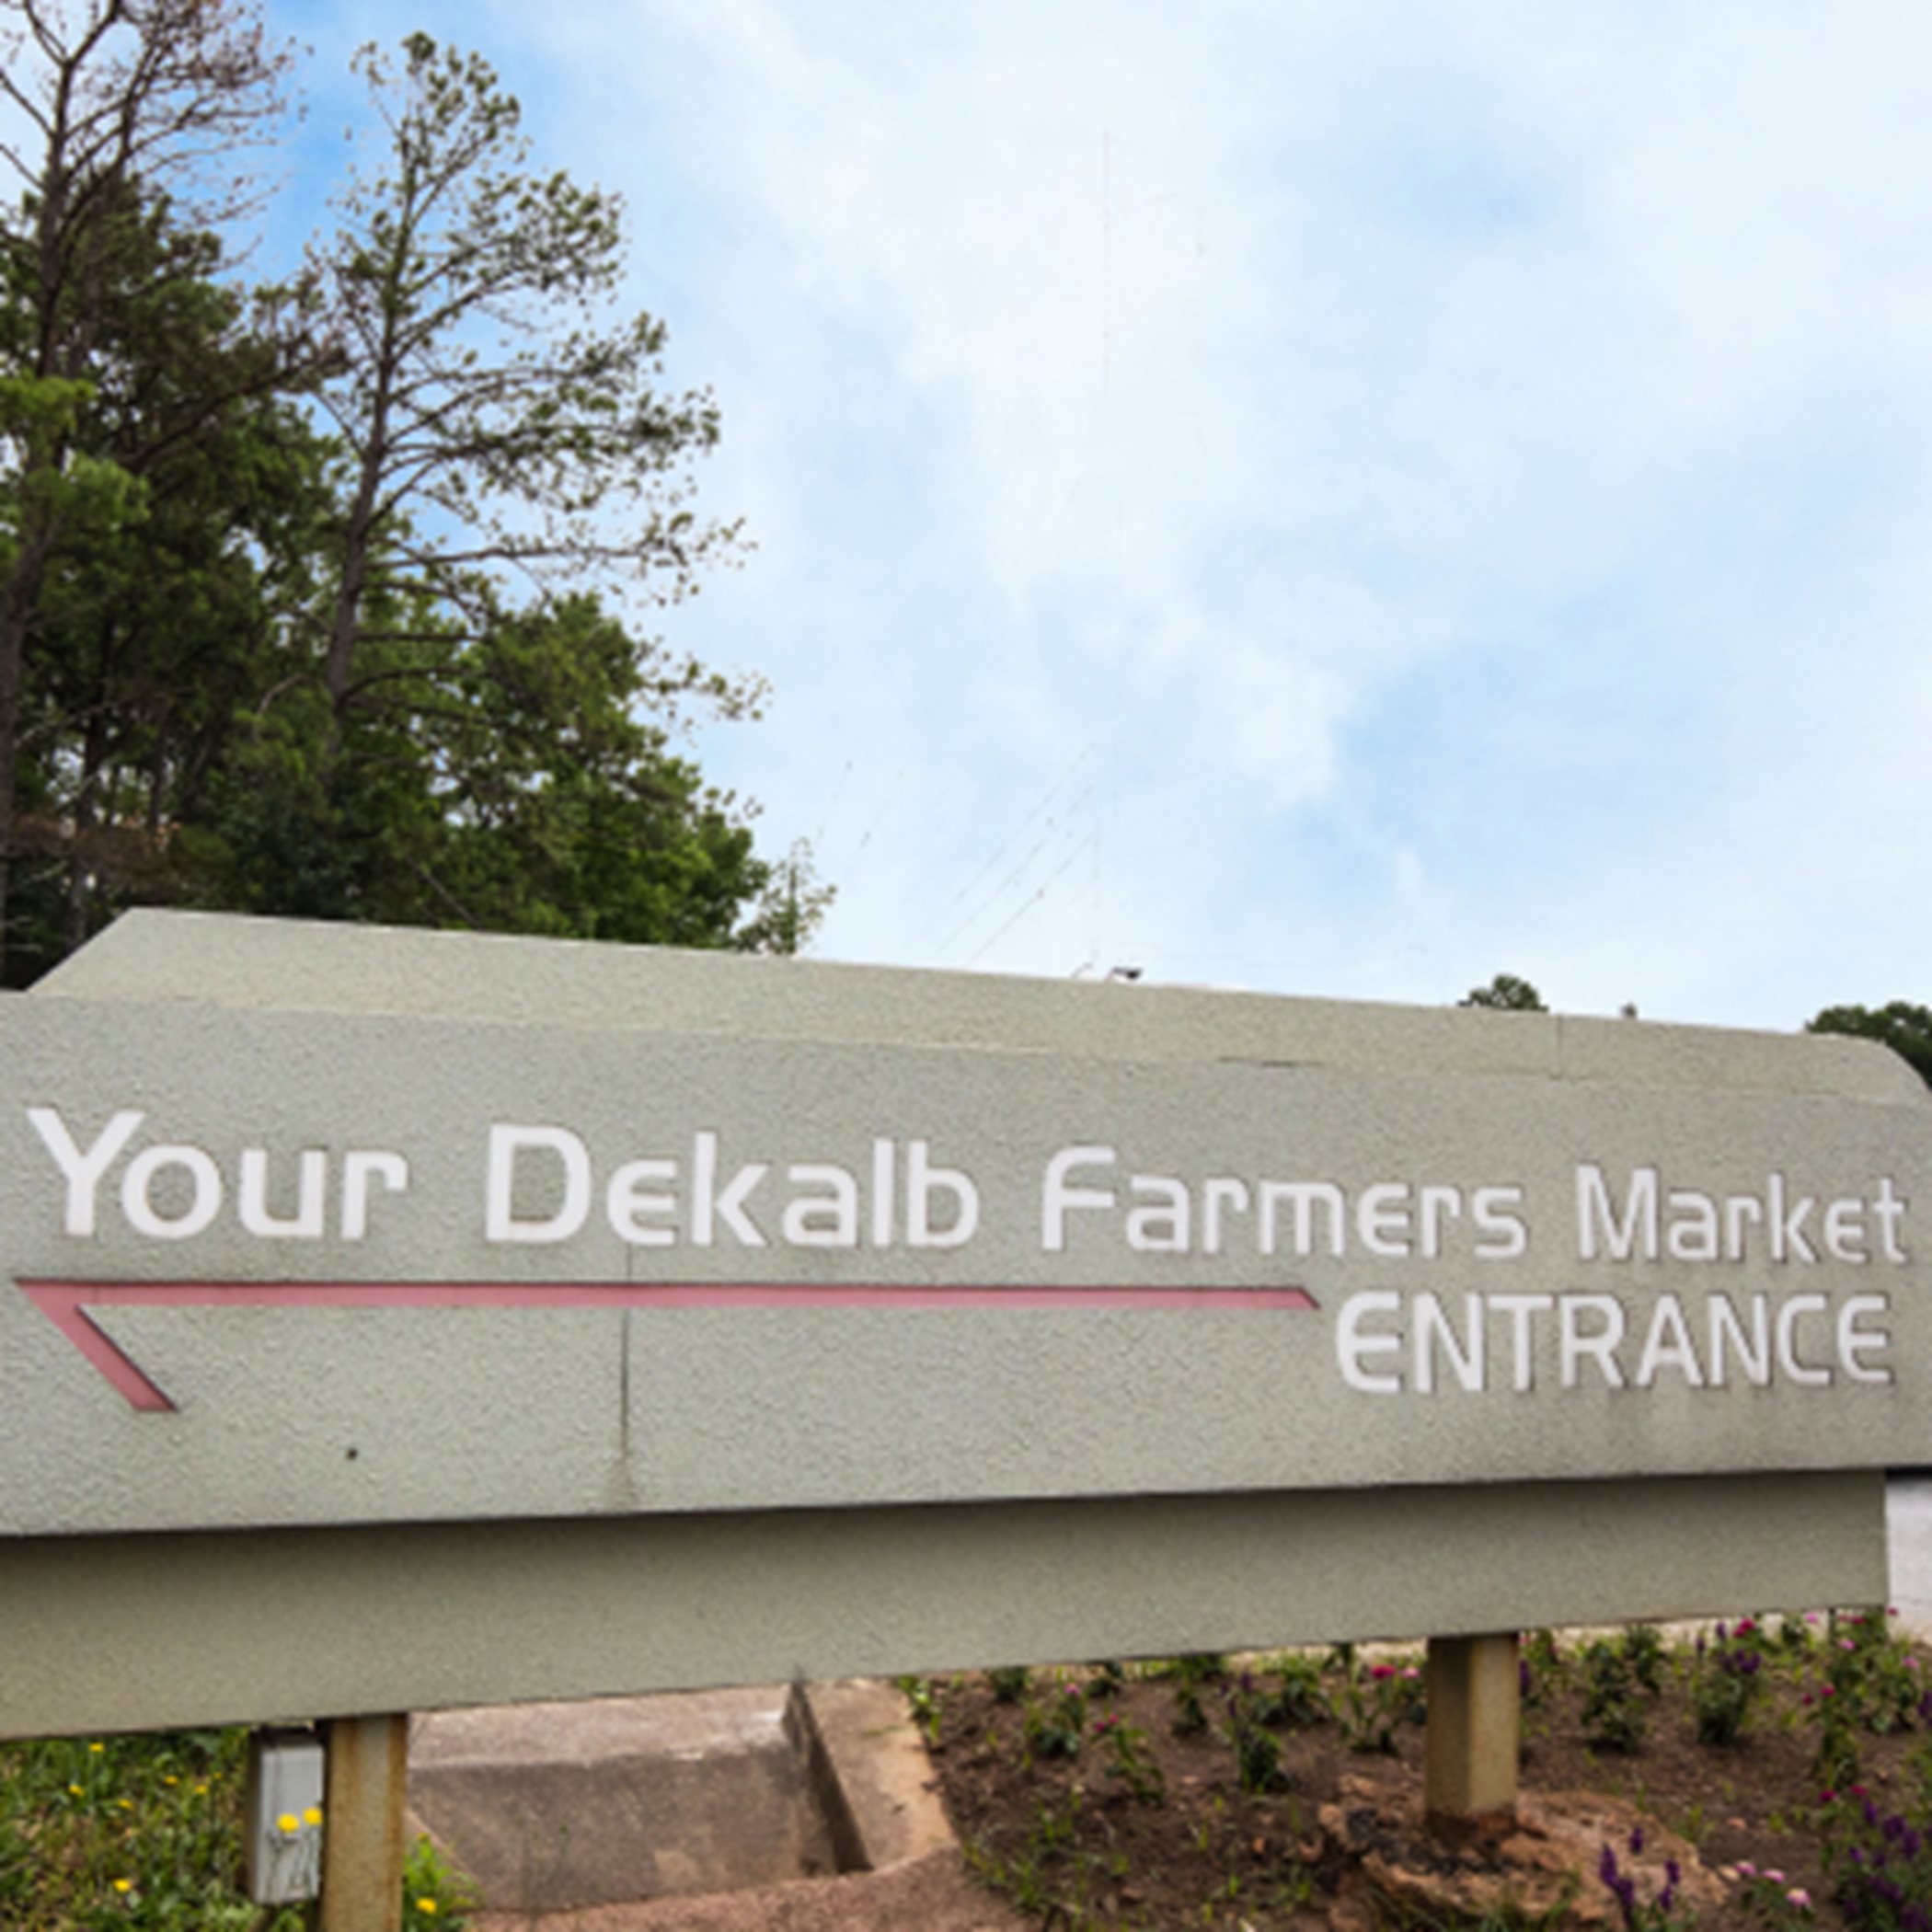 Dekalb Farmers Market